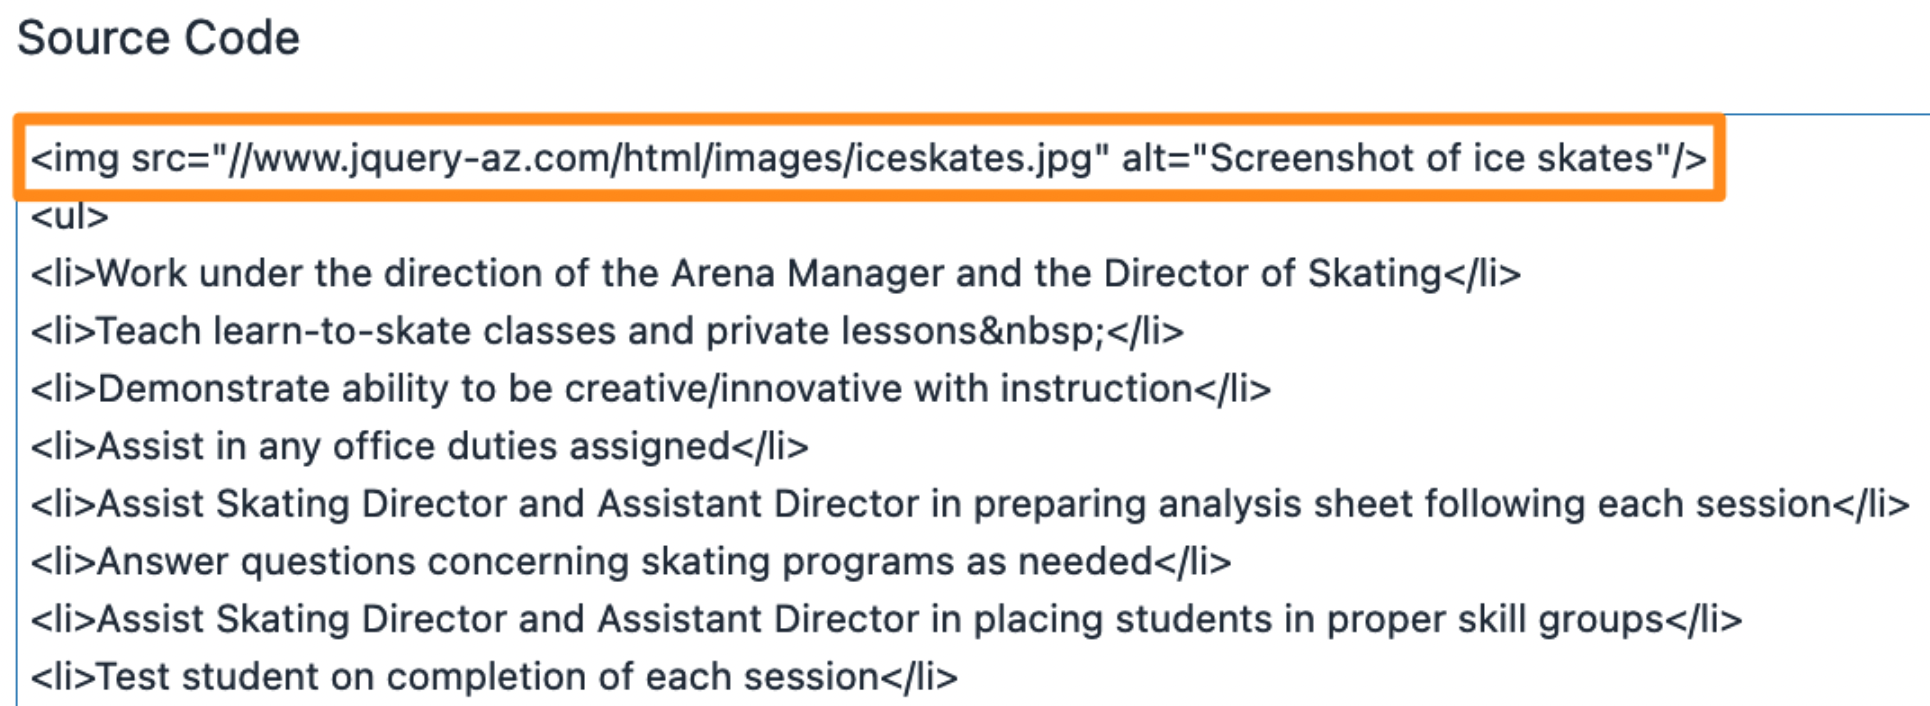 Screenshot of the image source code in the job post source code window